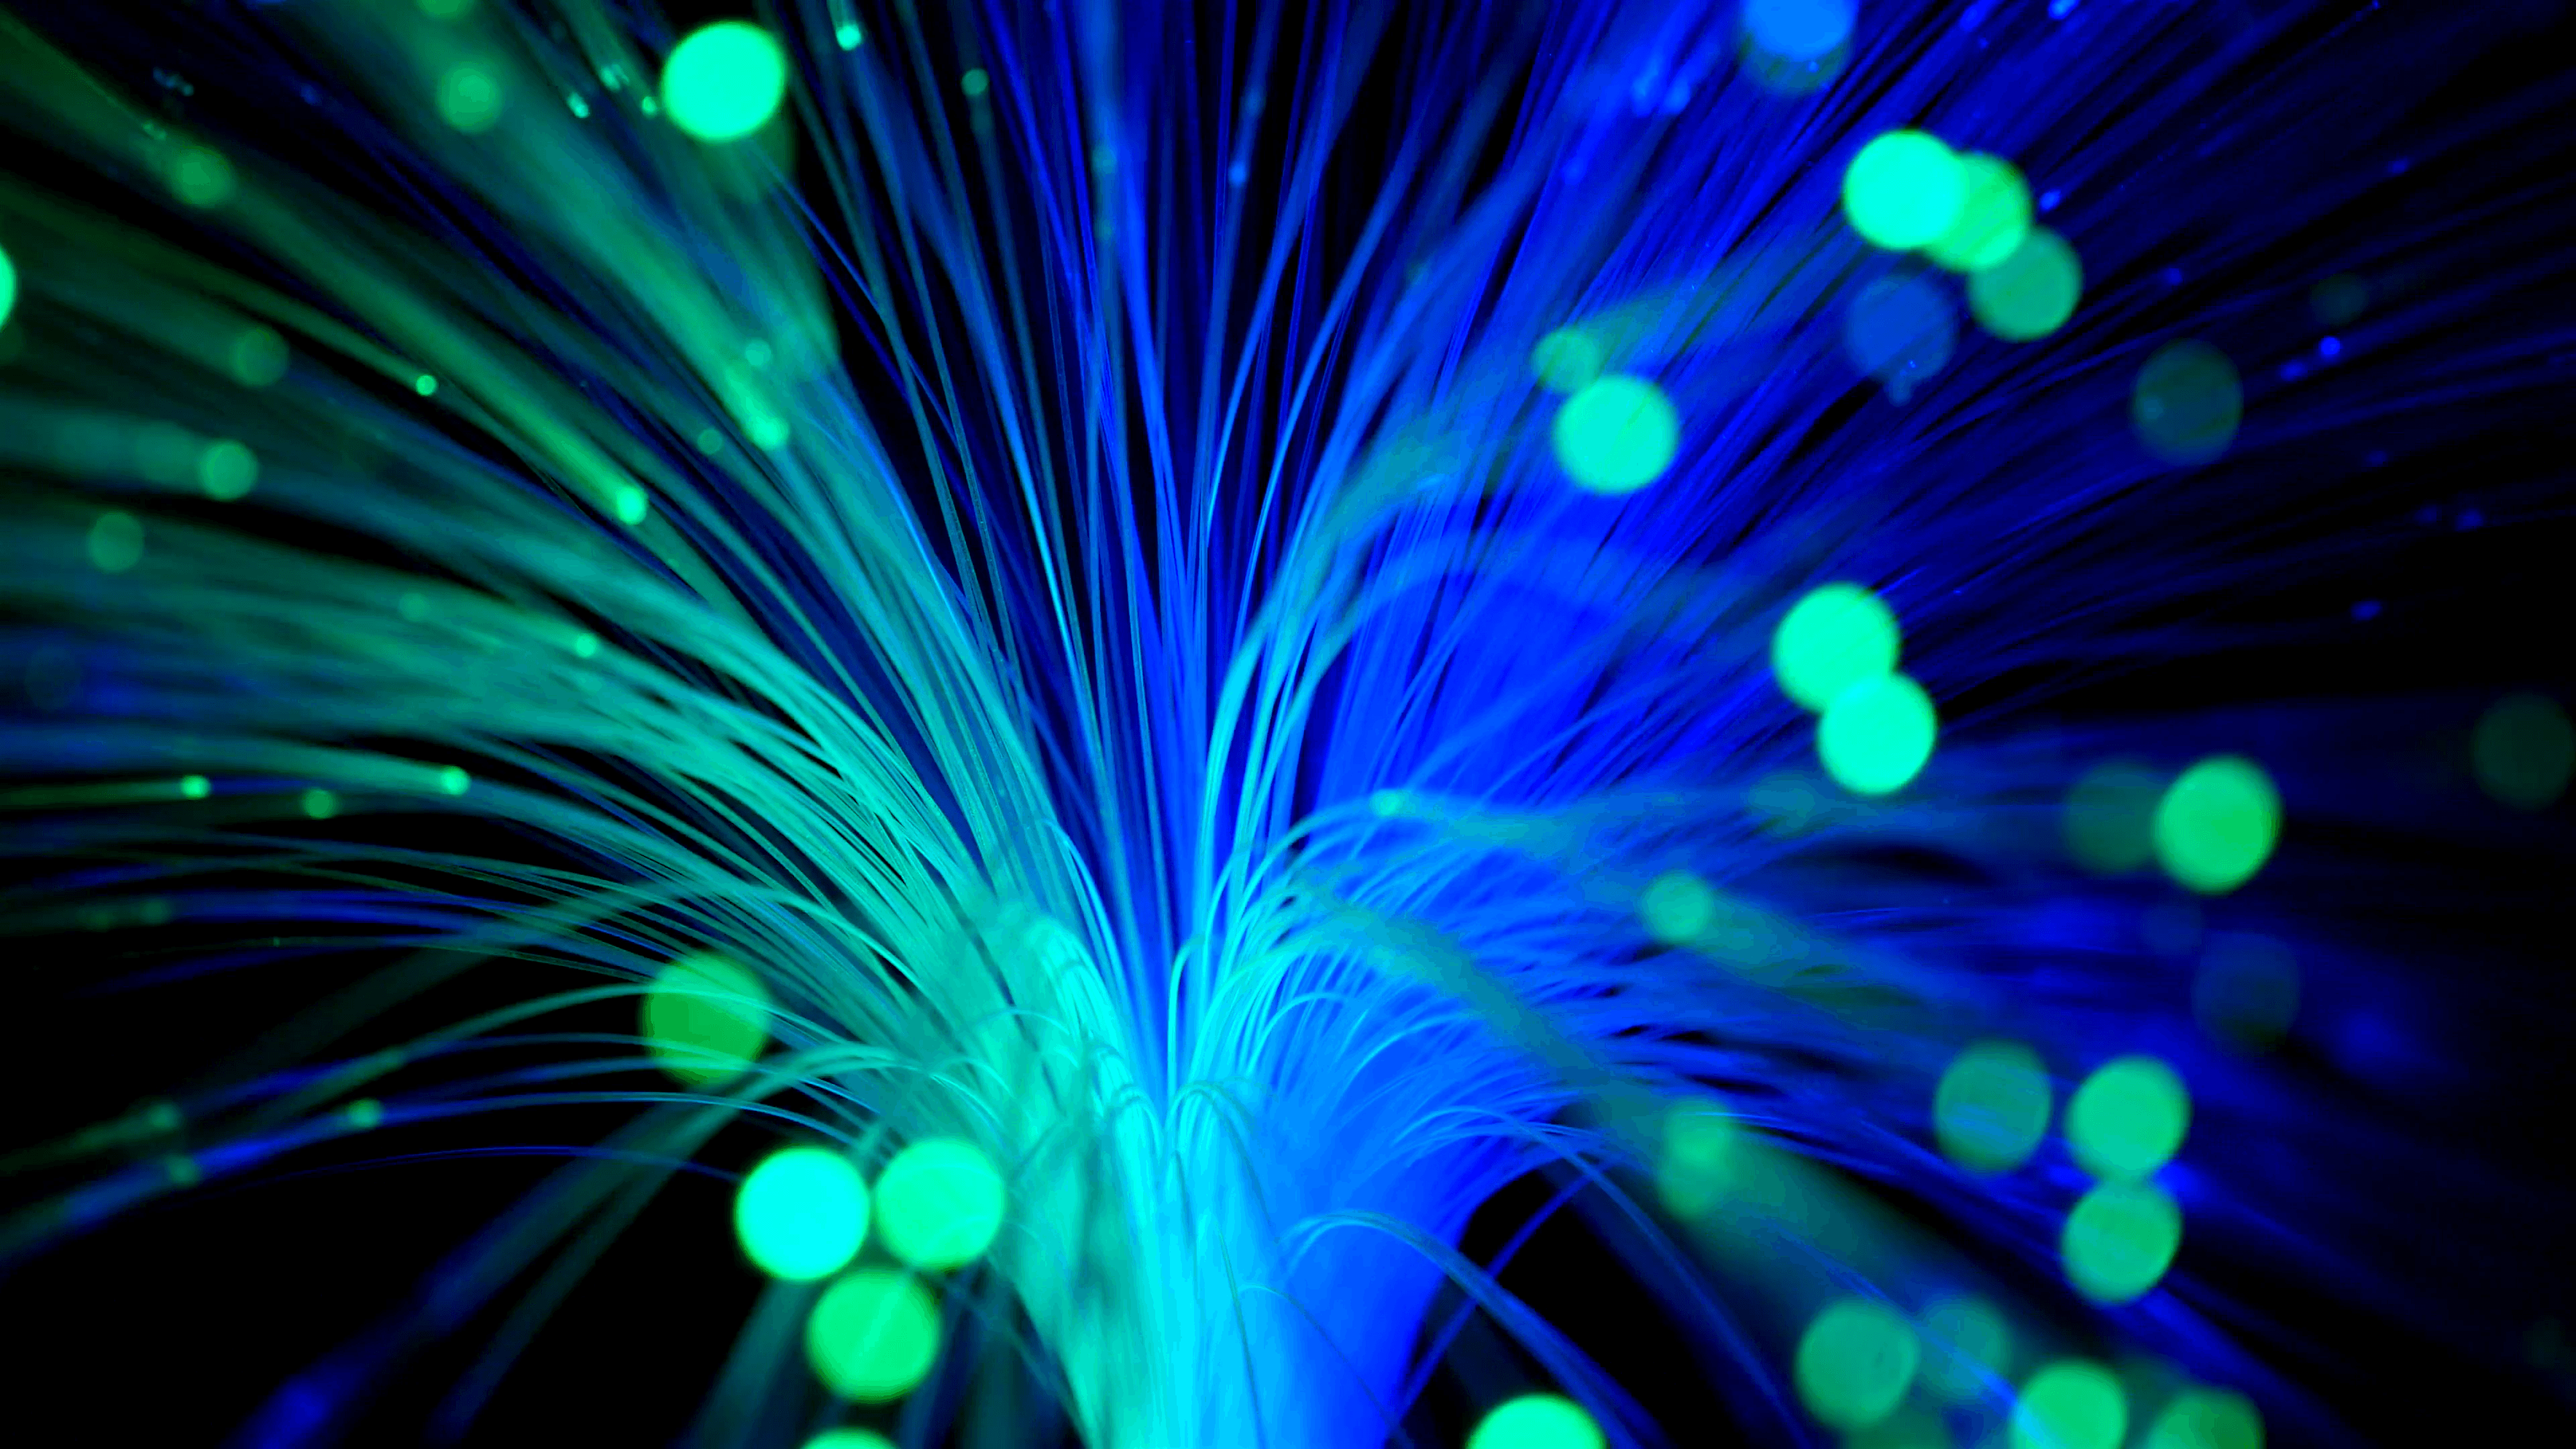 Green and blue fiber optics strands moving against a black